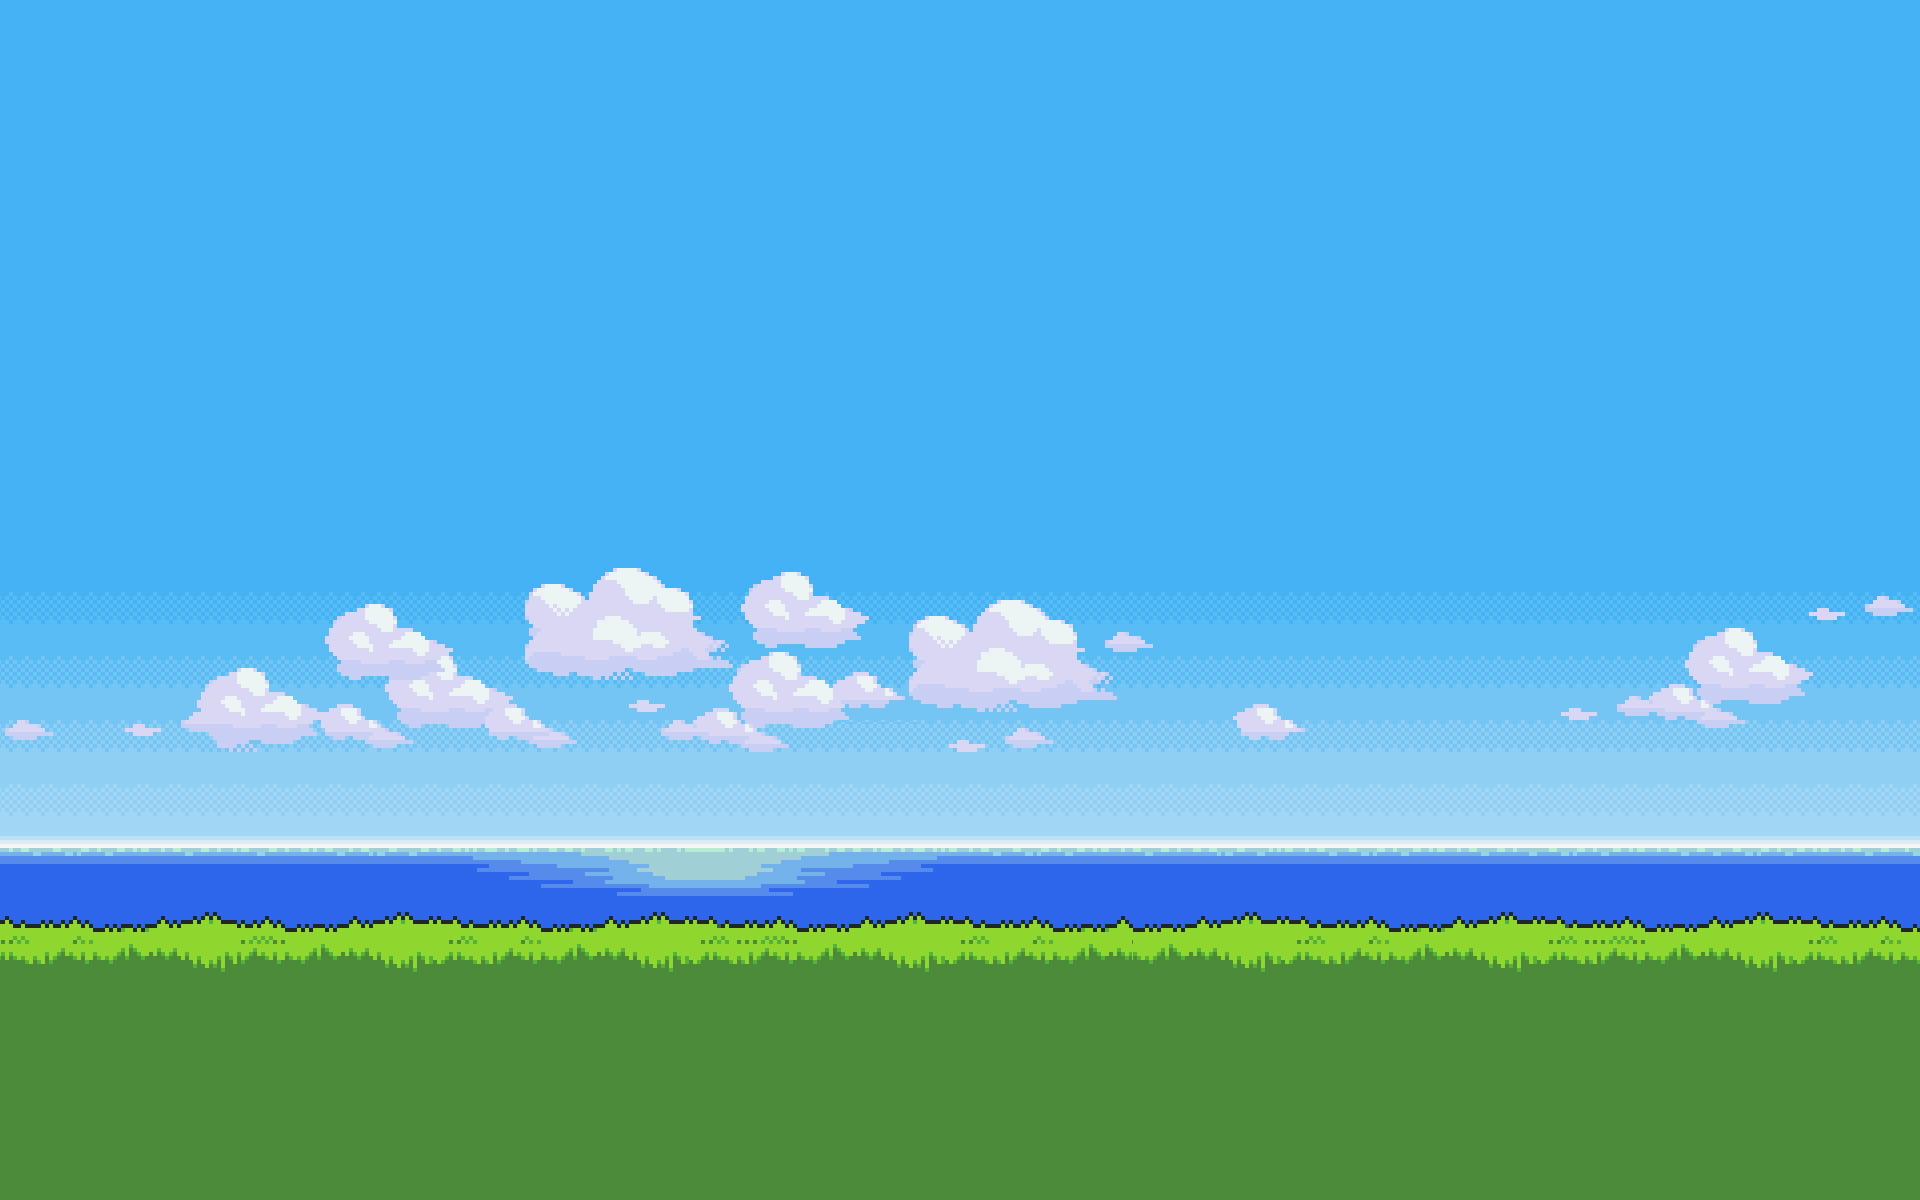 grass near seashore during daytime illustration, digital art, pixel art, pixels, pixelated